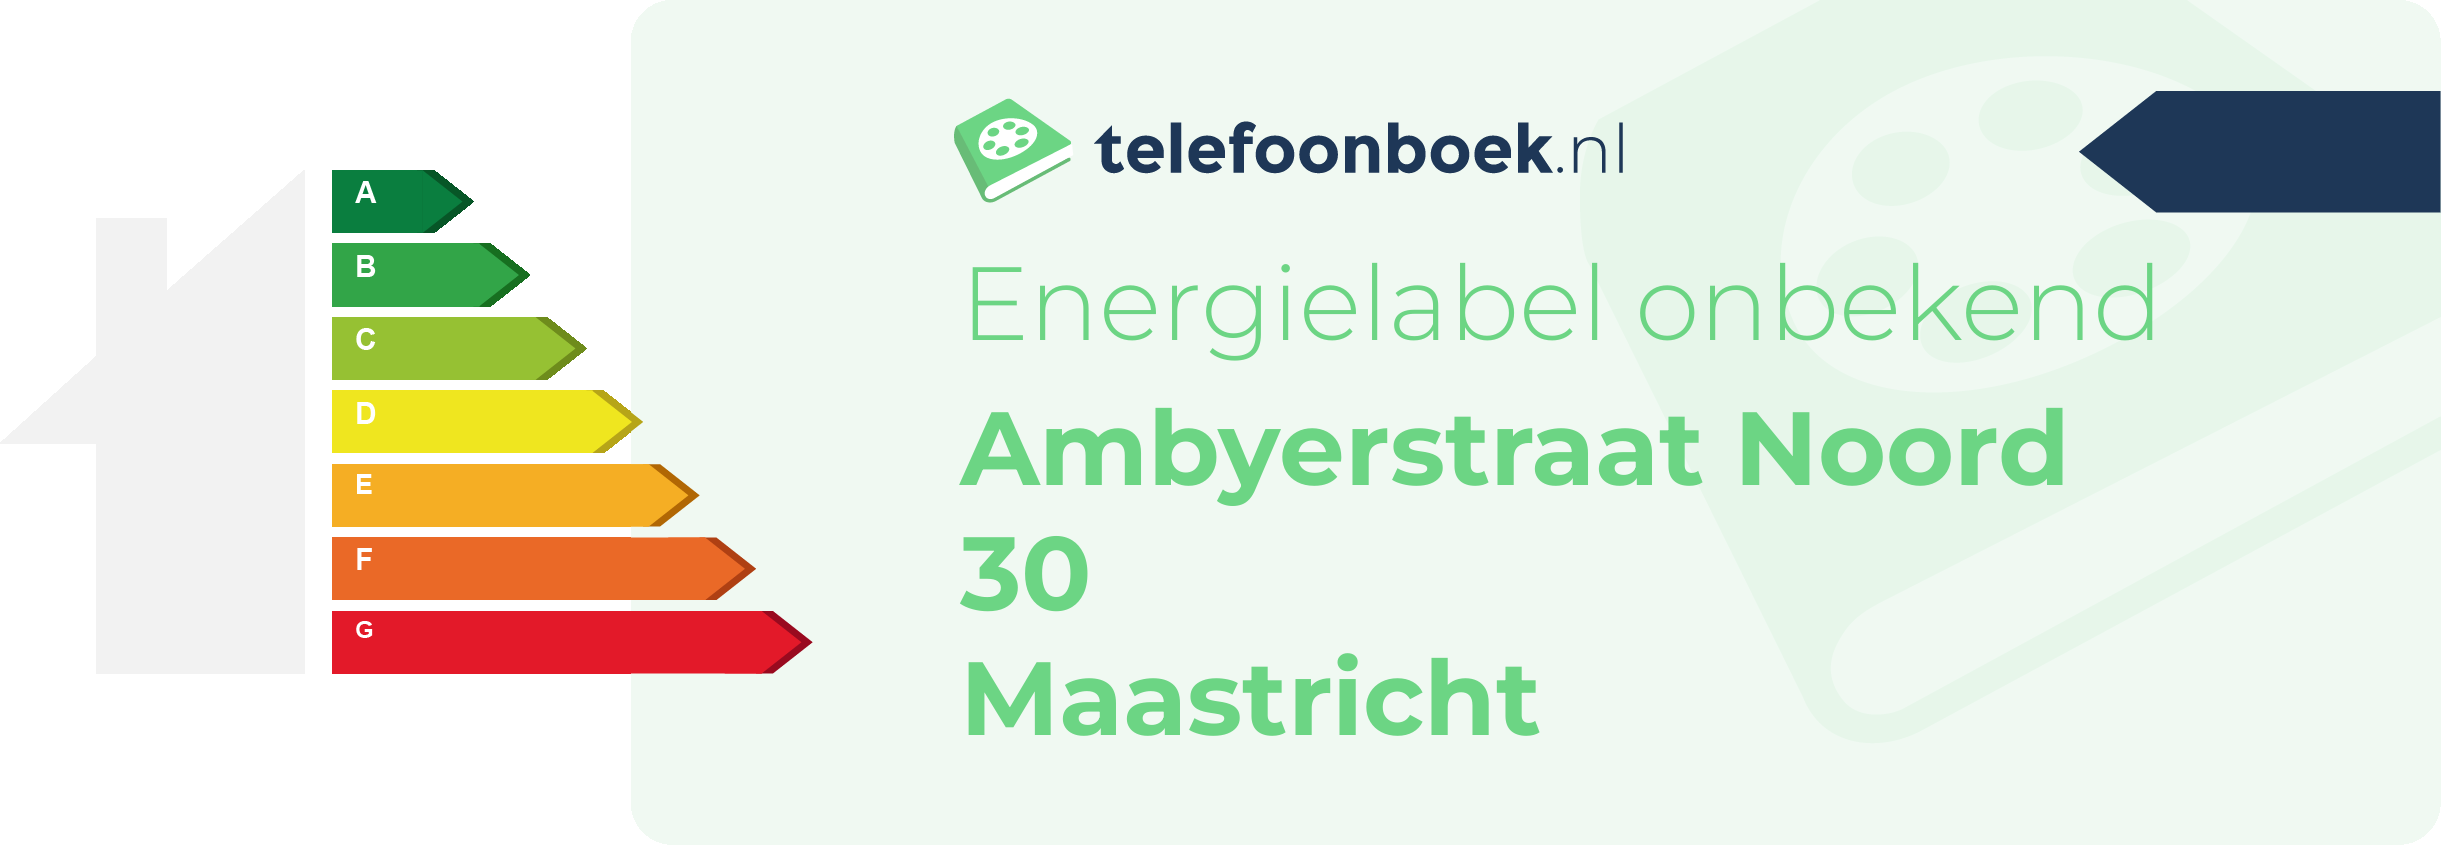 Energielabel Ambyerstraat Noord 30 Maastricht